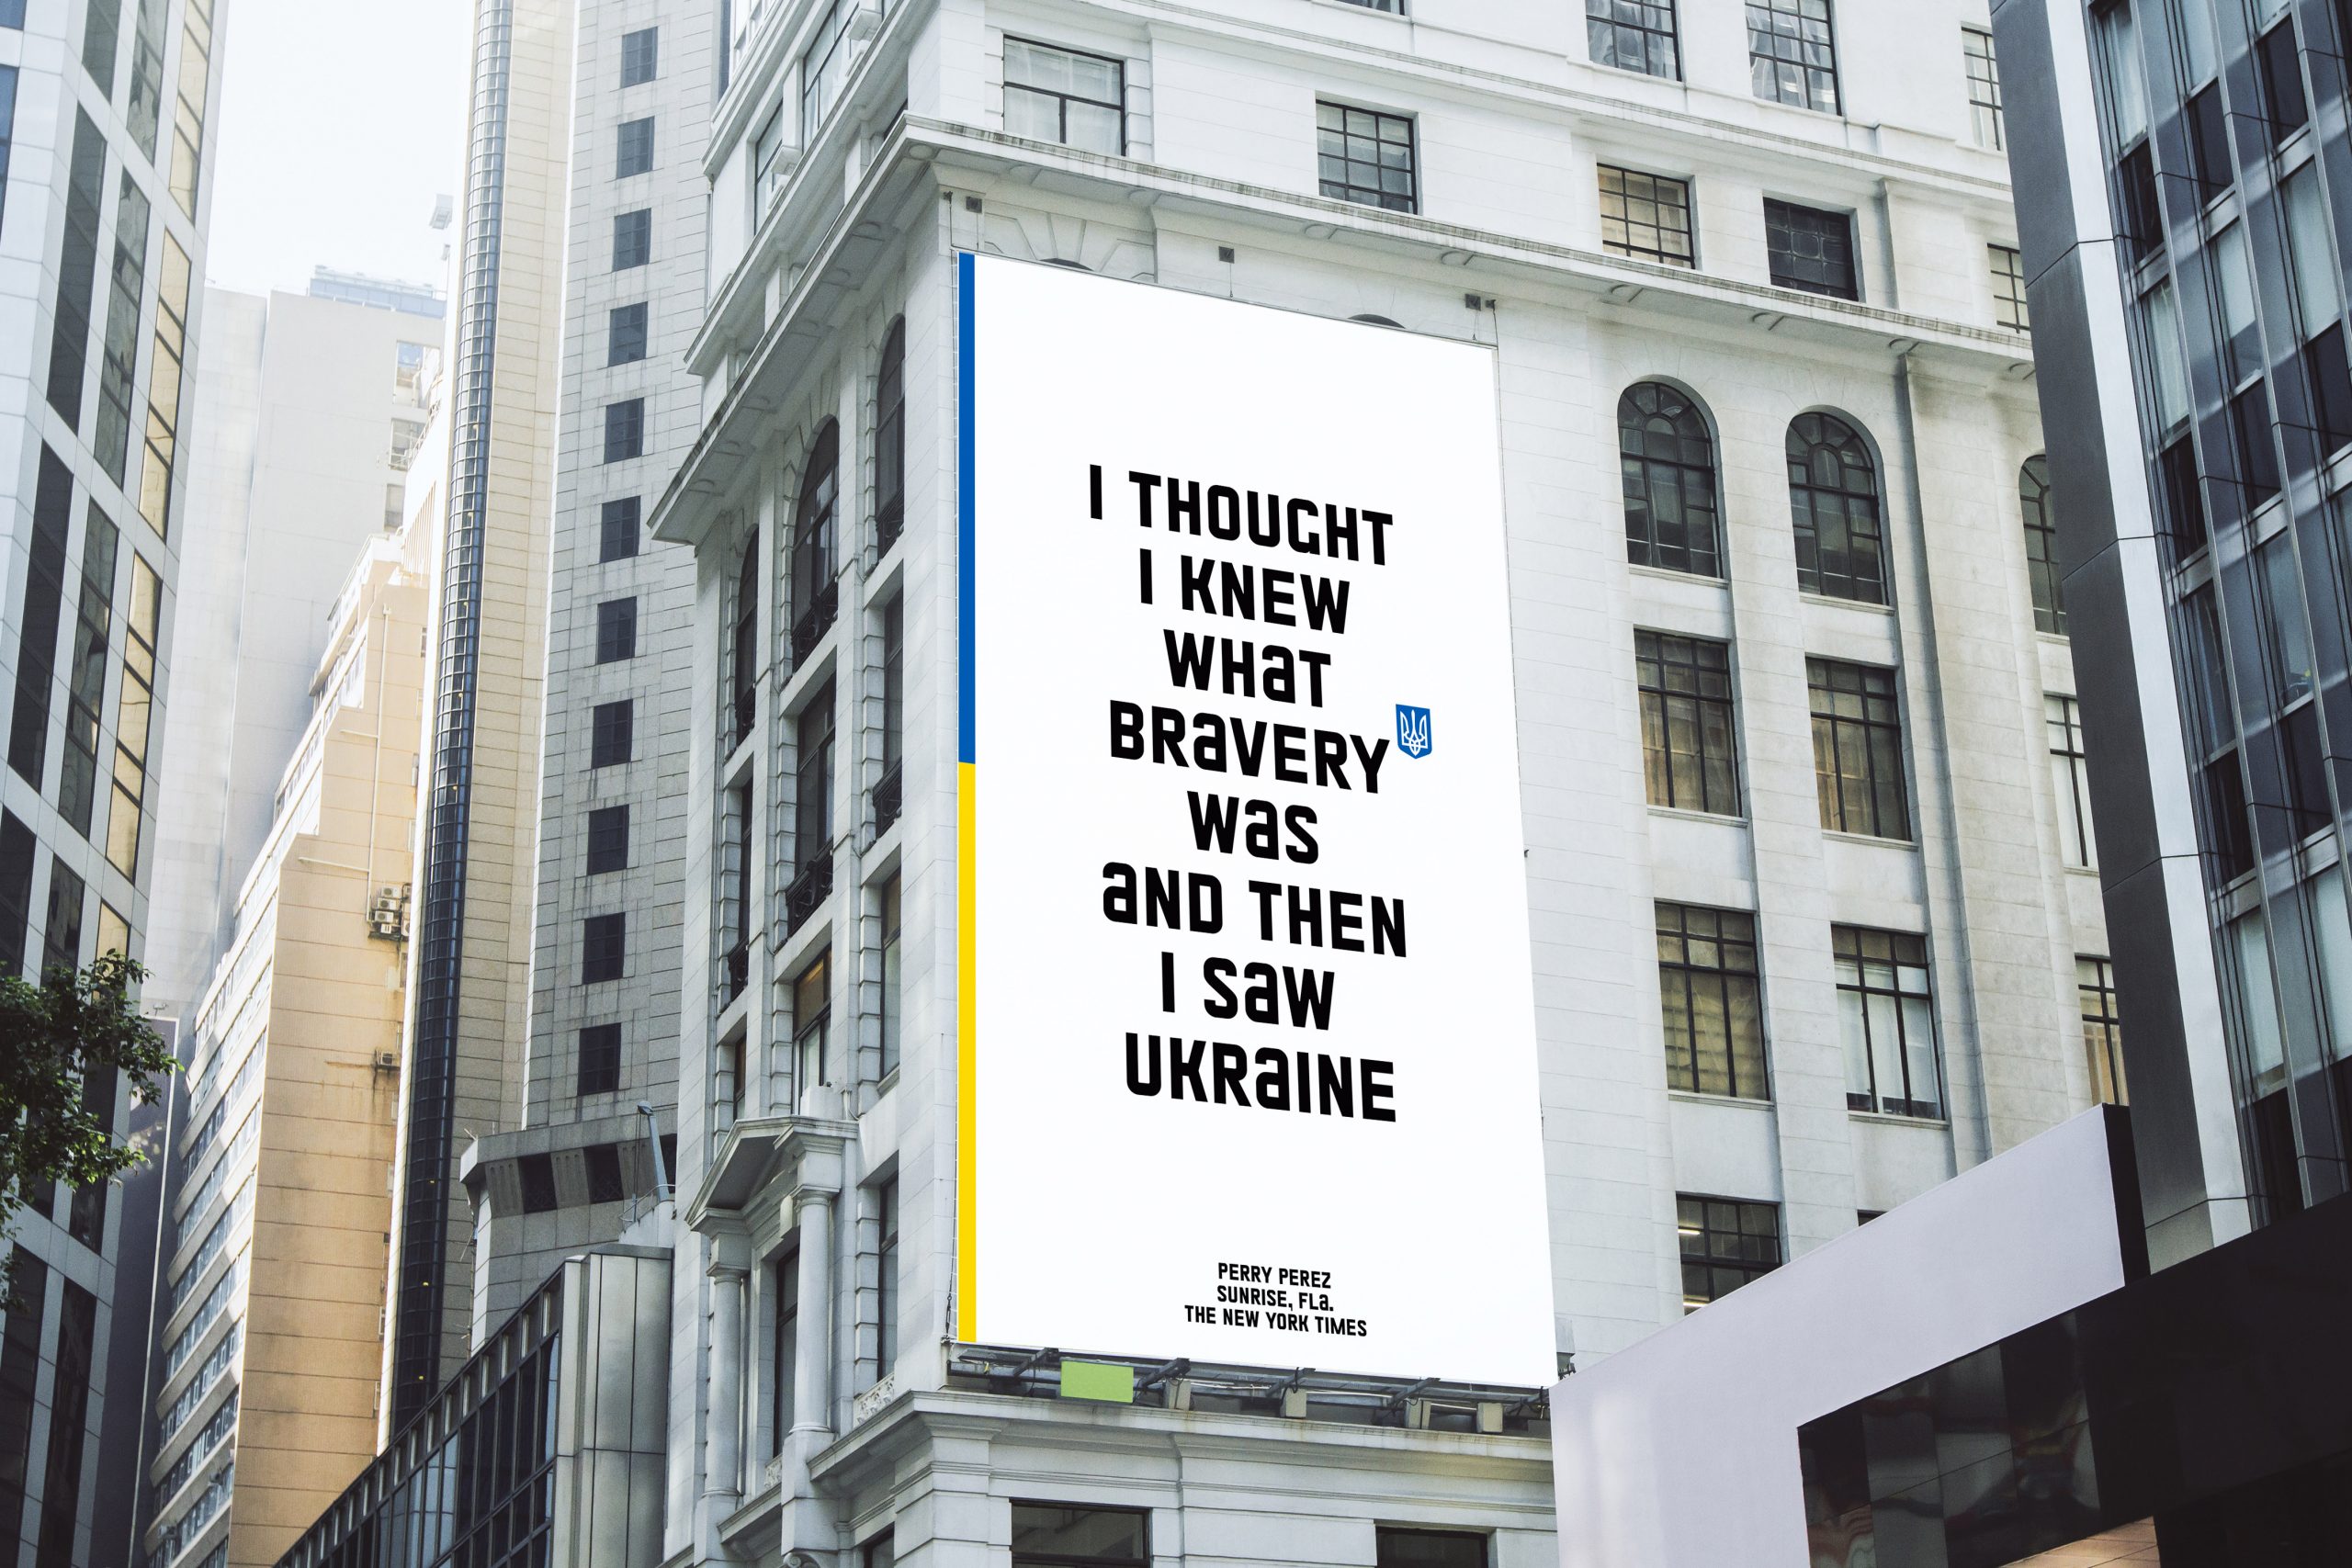 #BRAVEUKRAINE Banda Agency encourages creatives to highlight Ukraine’s bravery in their works